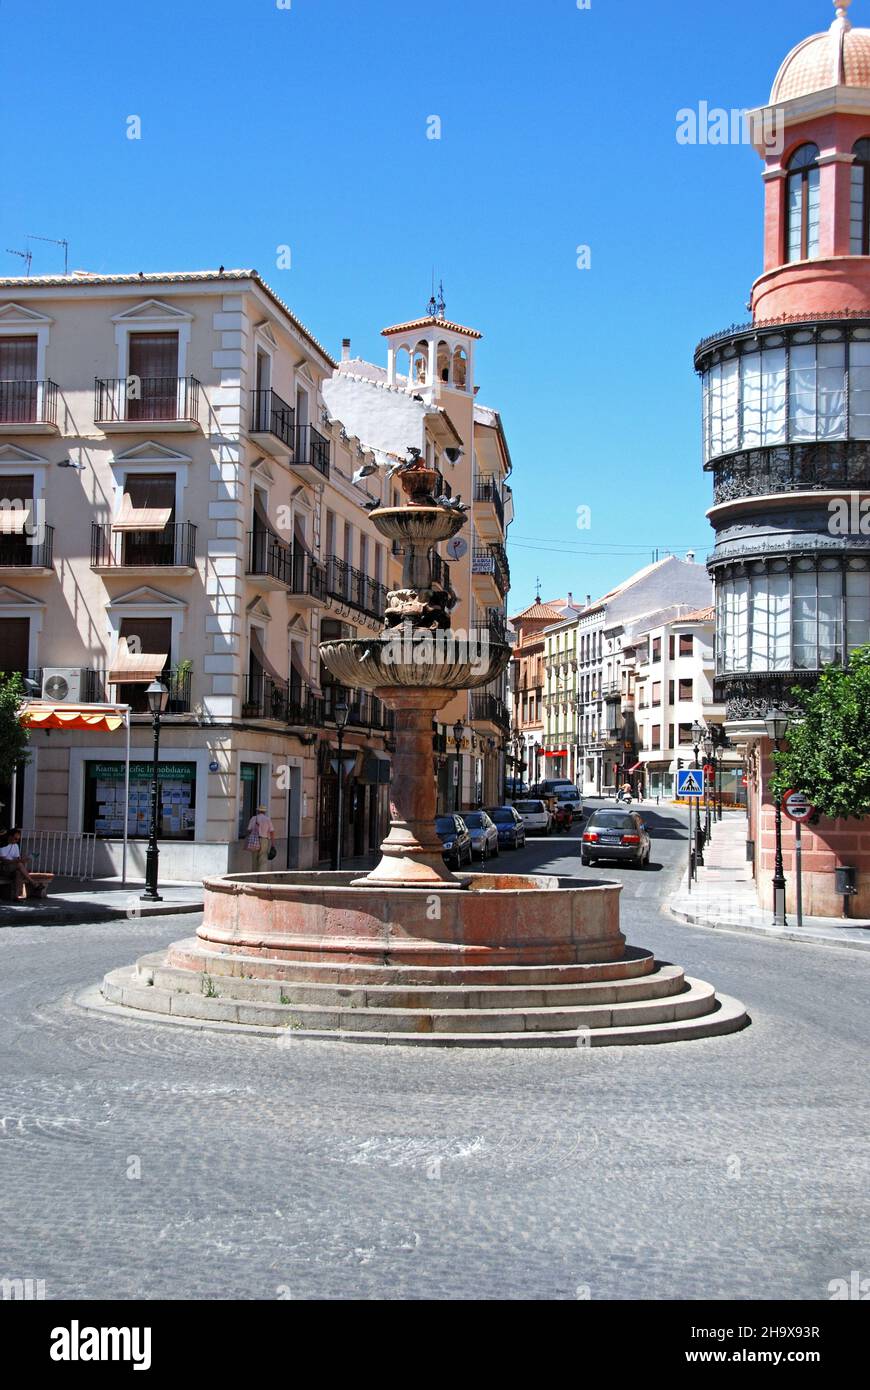 Fountain in the Plaza san Sebastian, Antequera, Spain. Stock Photo